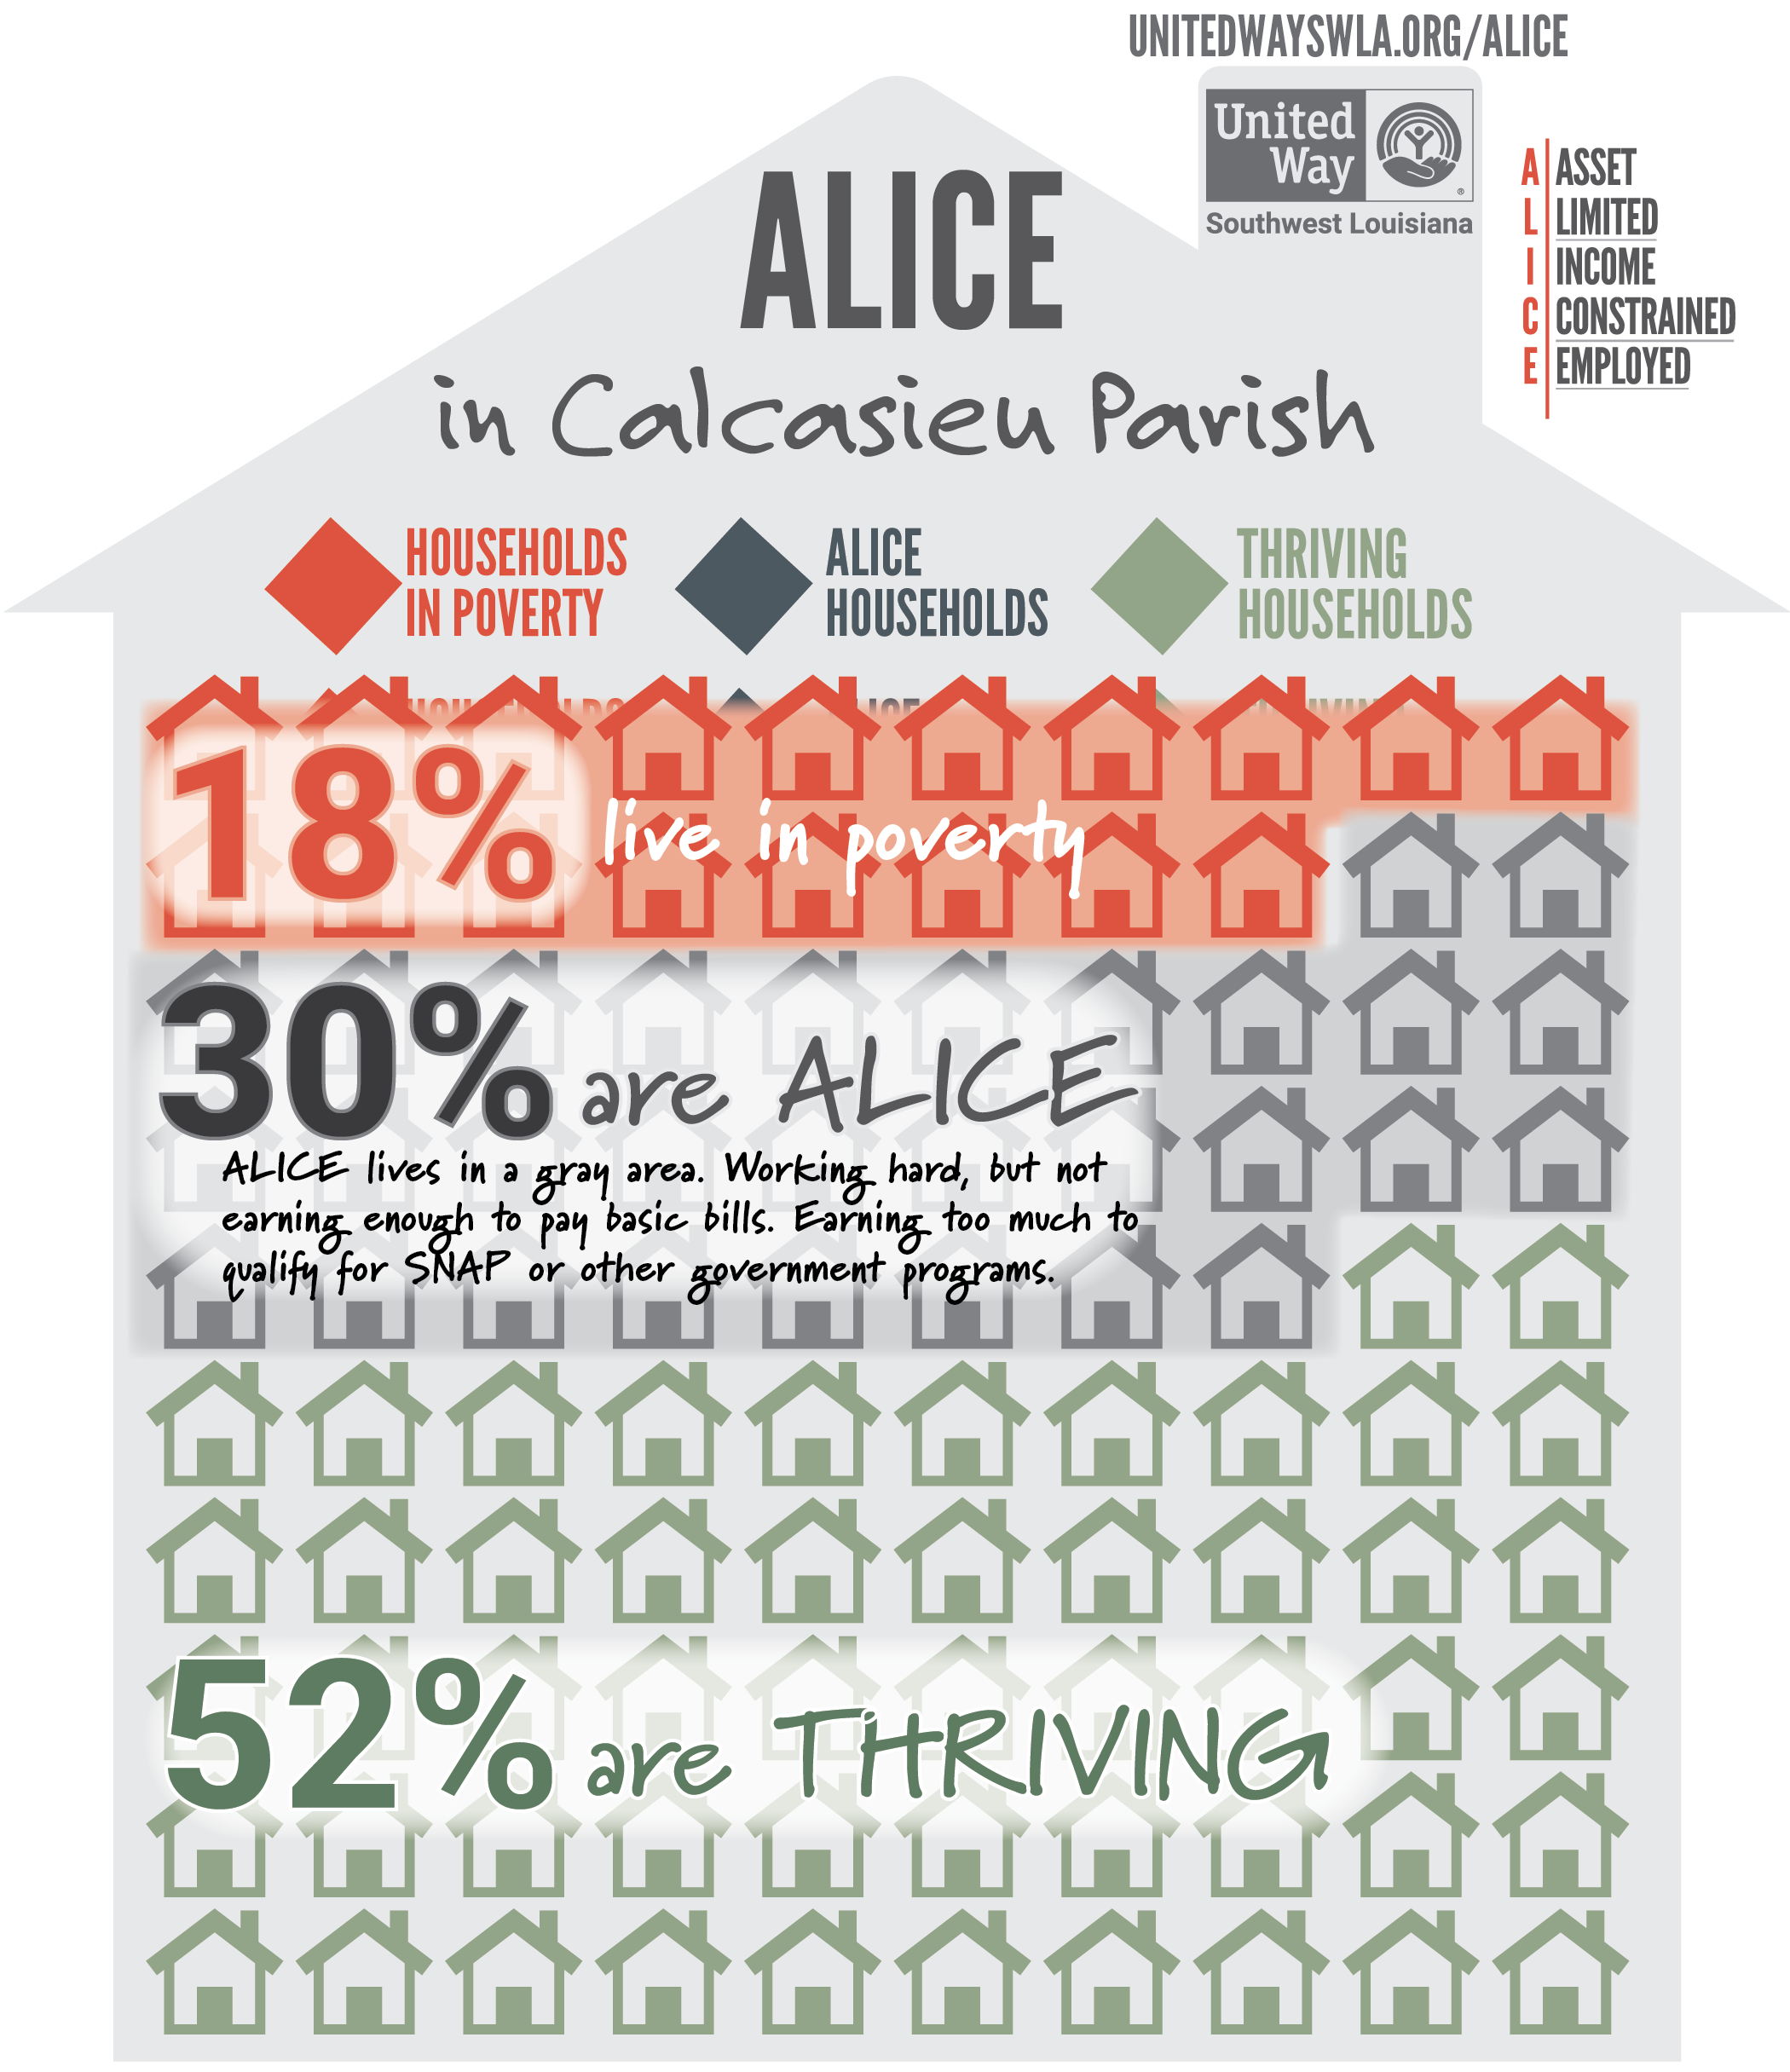 ALICE HOUSEHOLDS IN CALCASIEU PARISH